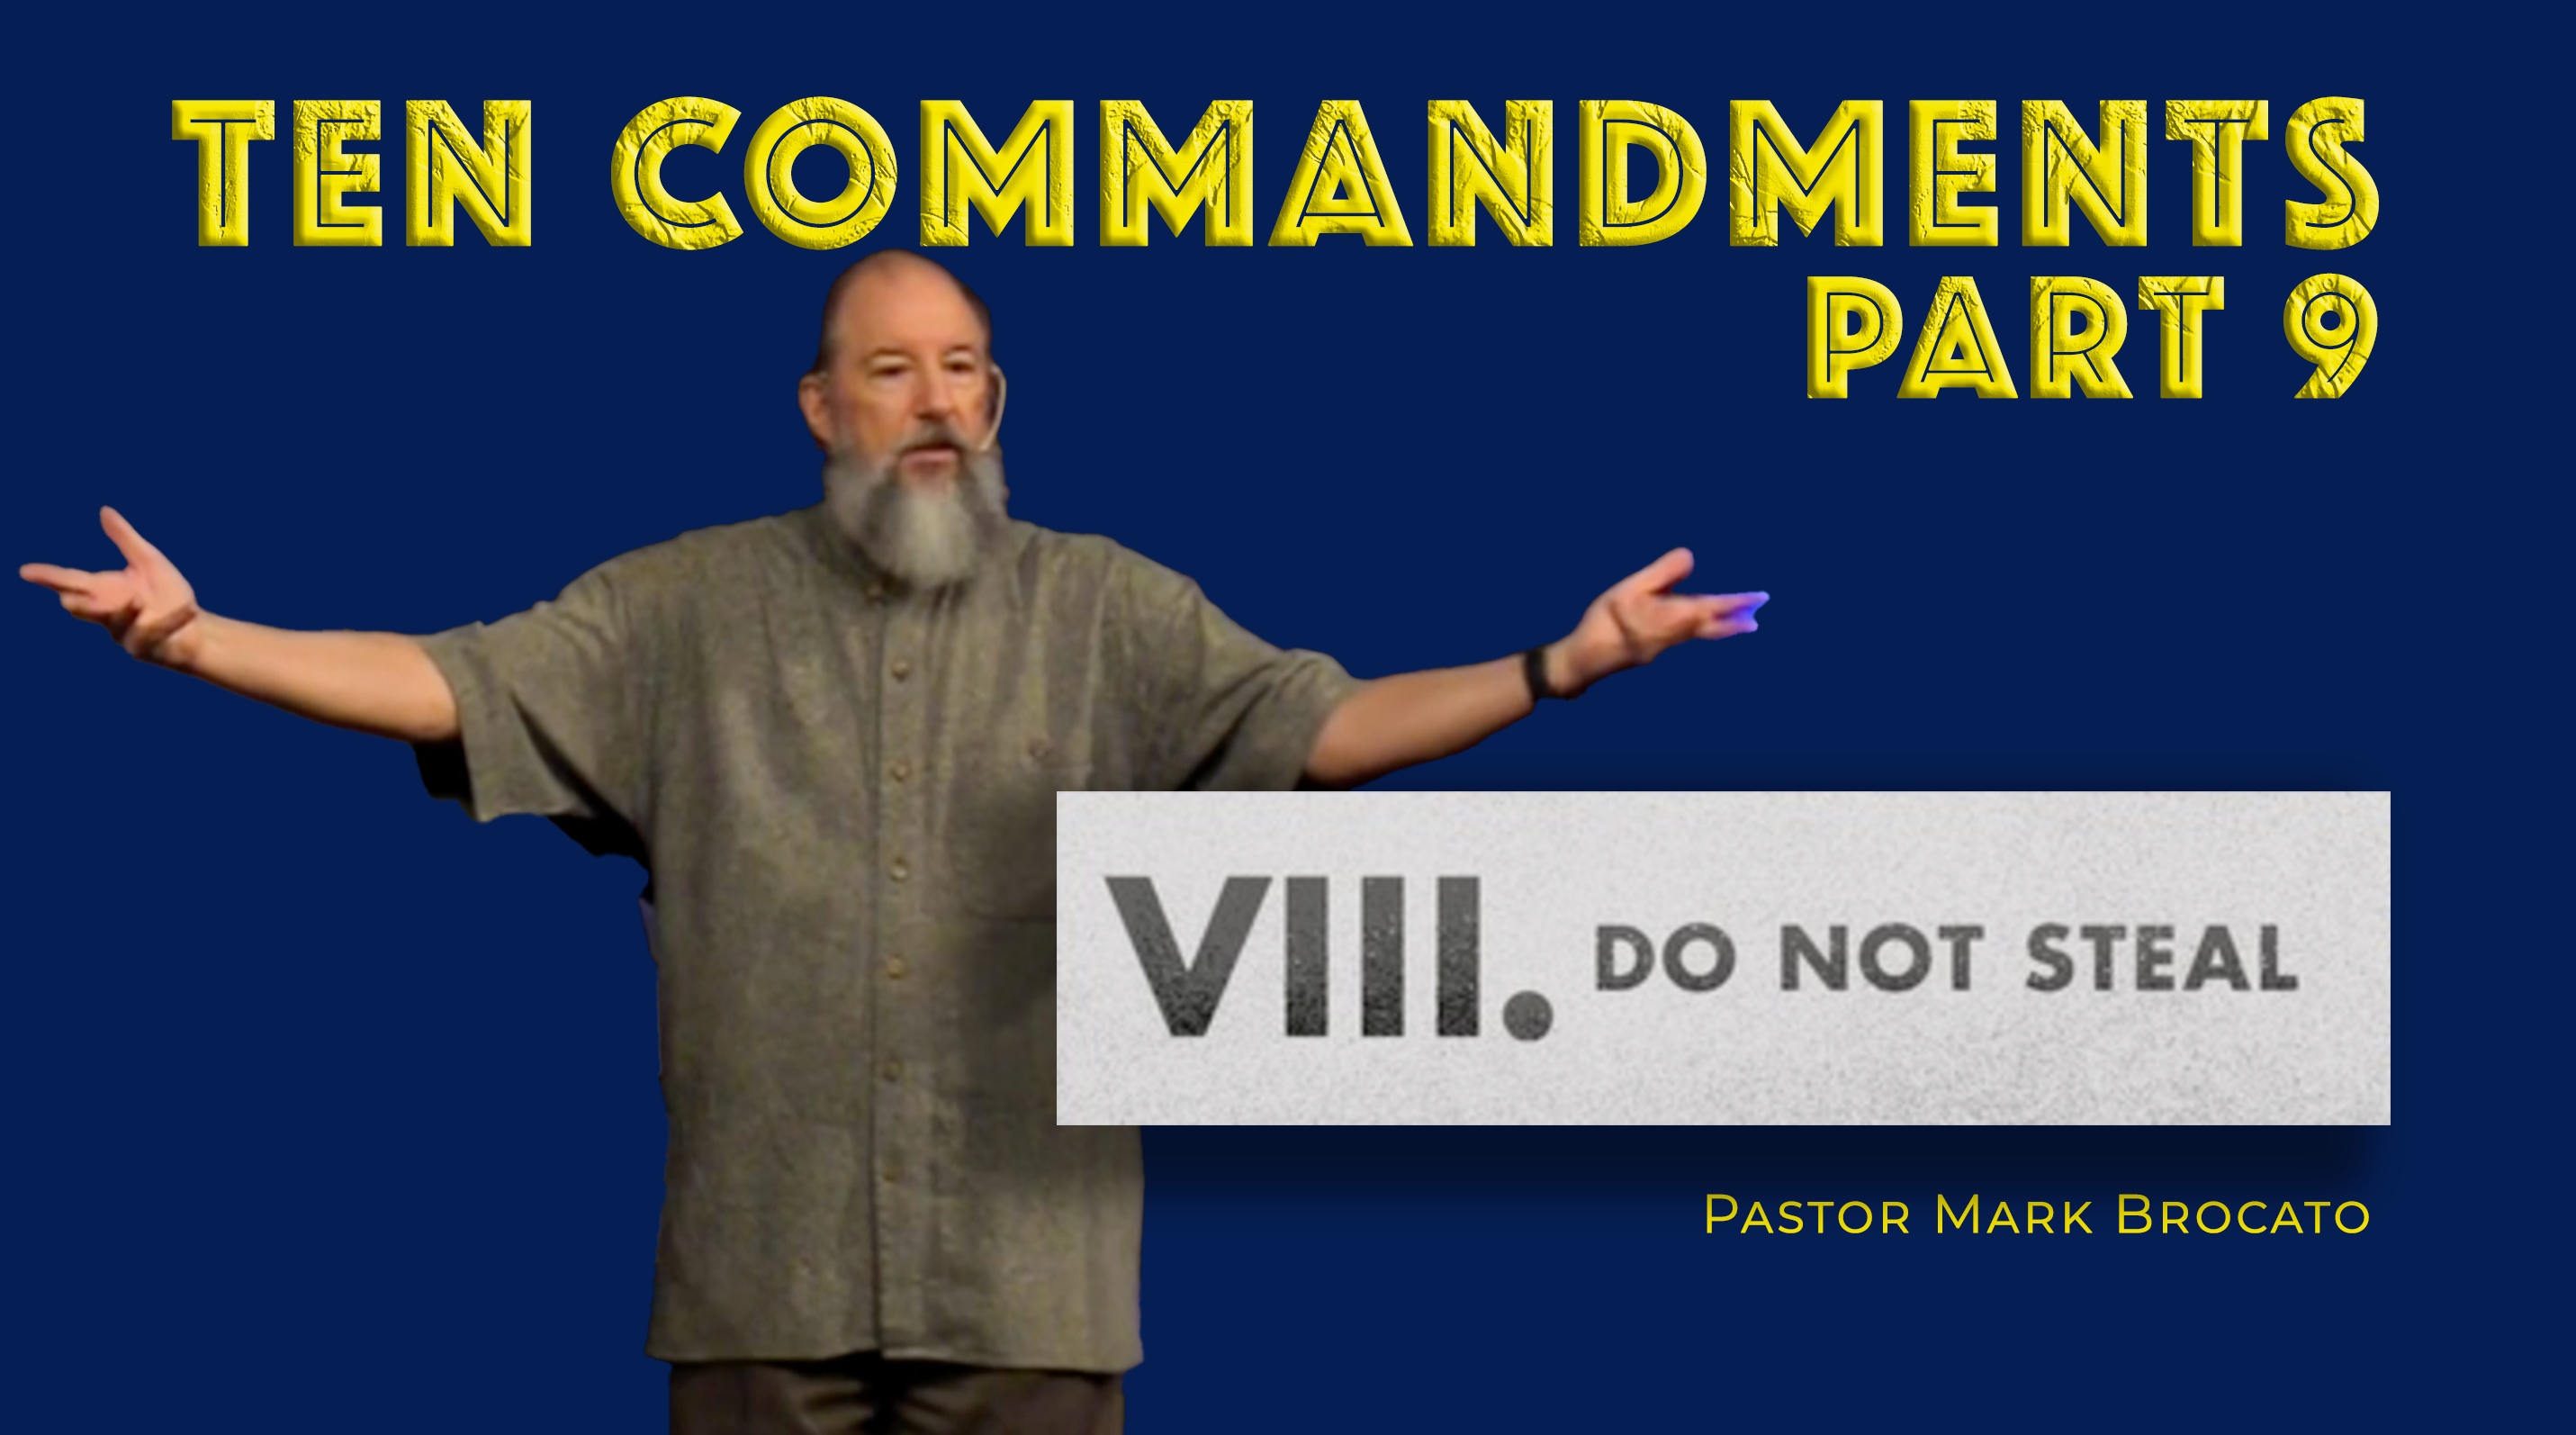 Commandment VIII